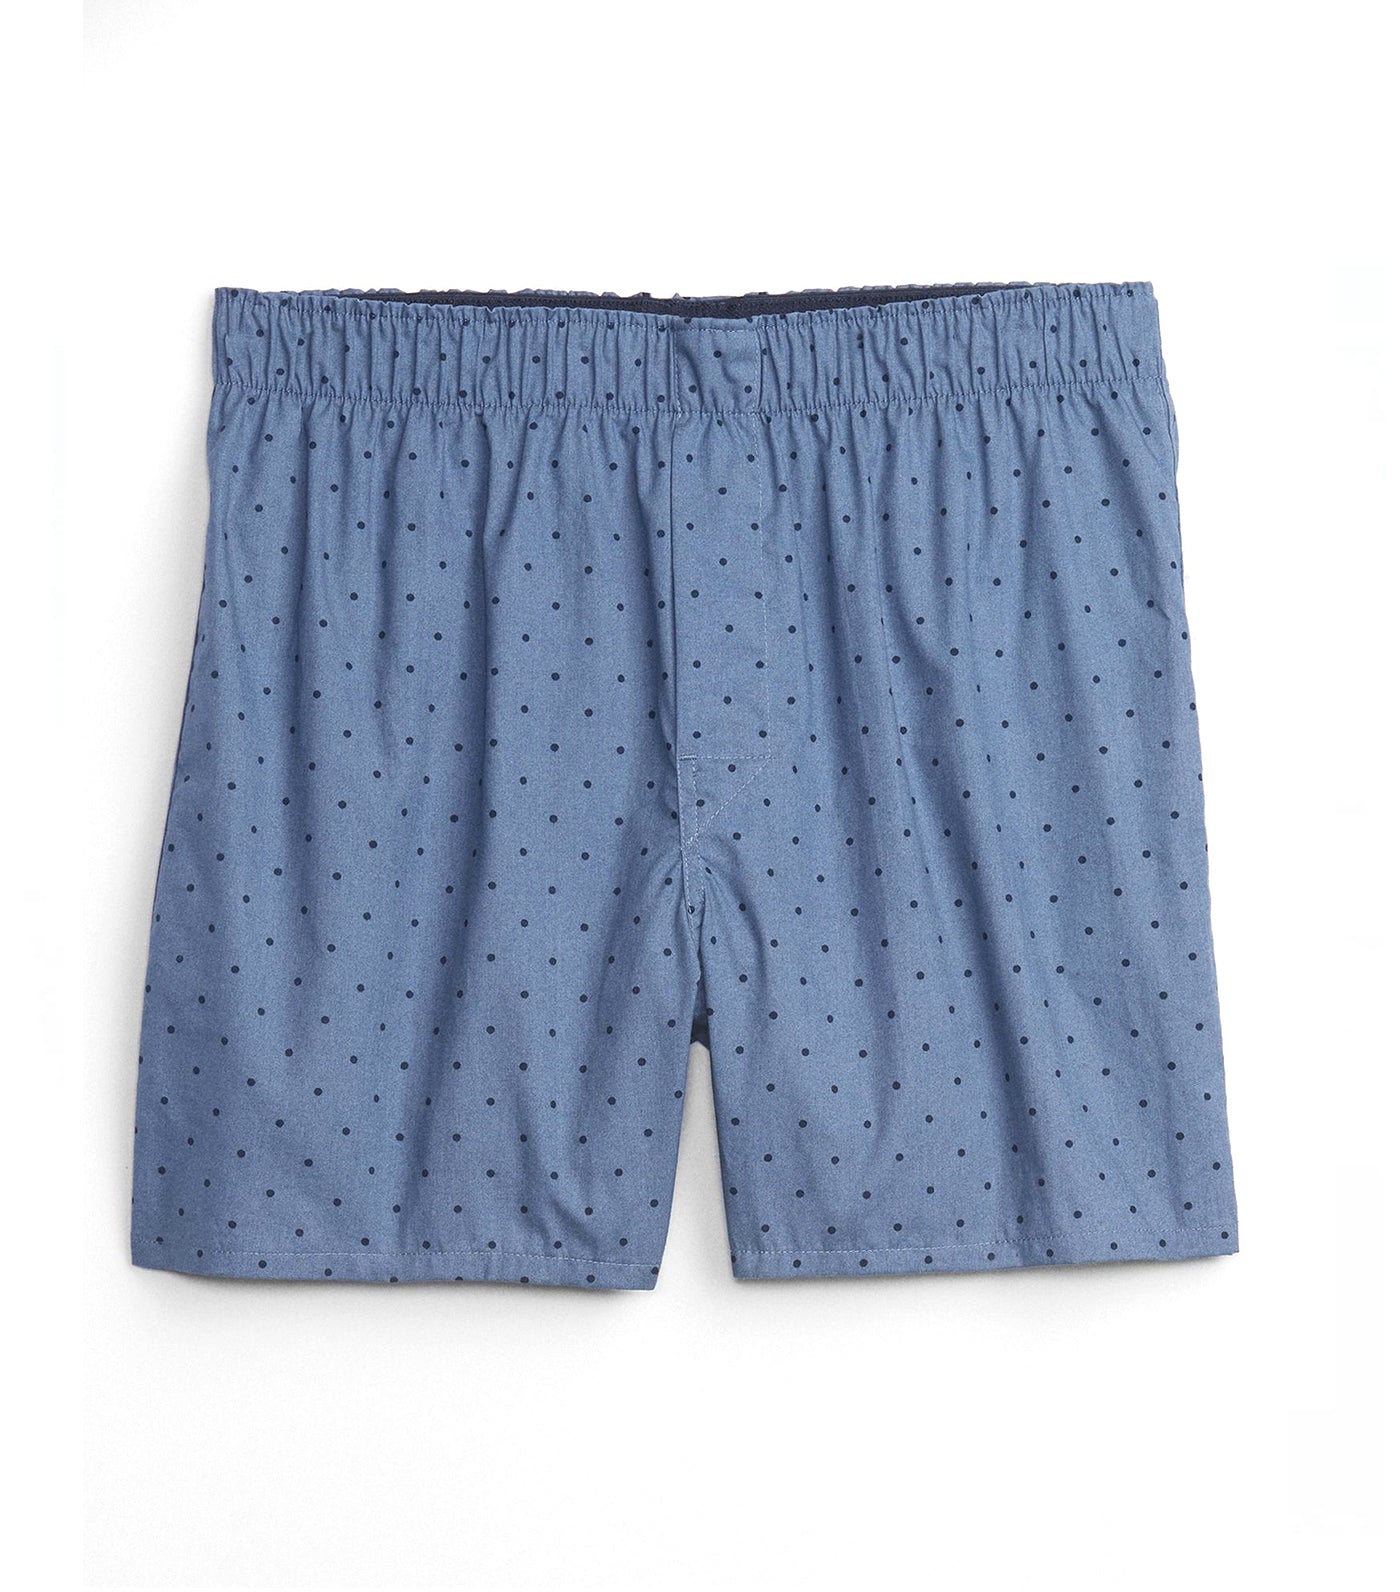 Old Navy Soft-Washed Boxer Shorts 3-Pack for Men Multi Dots